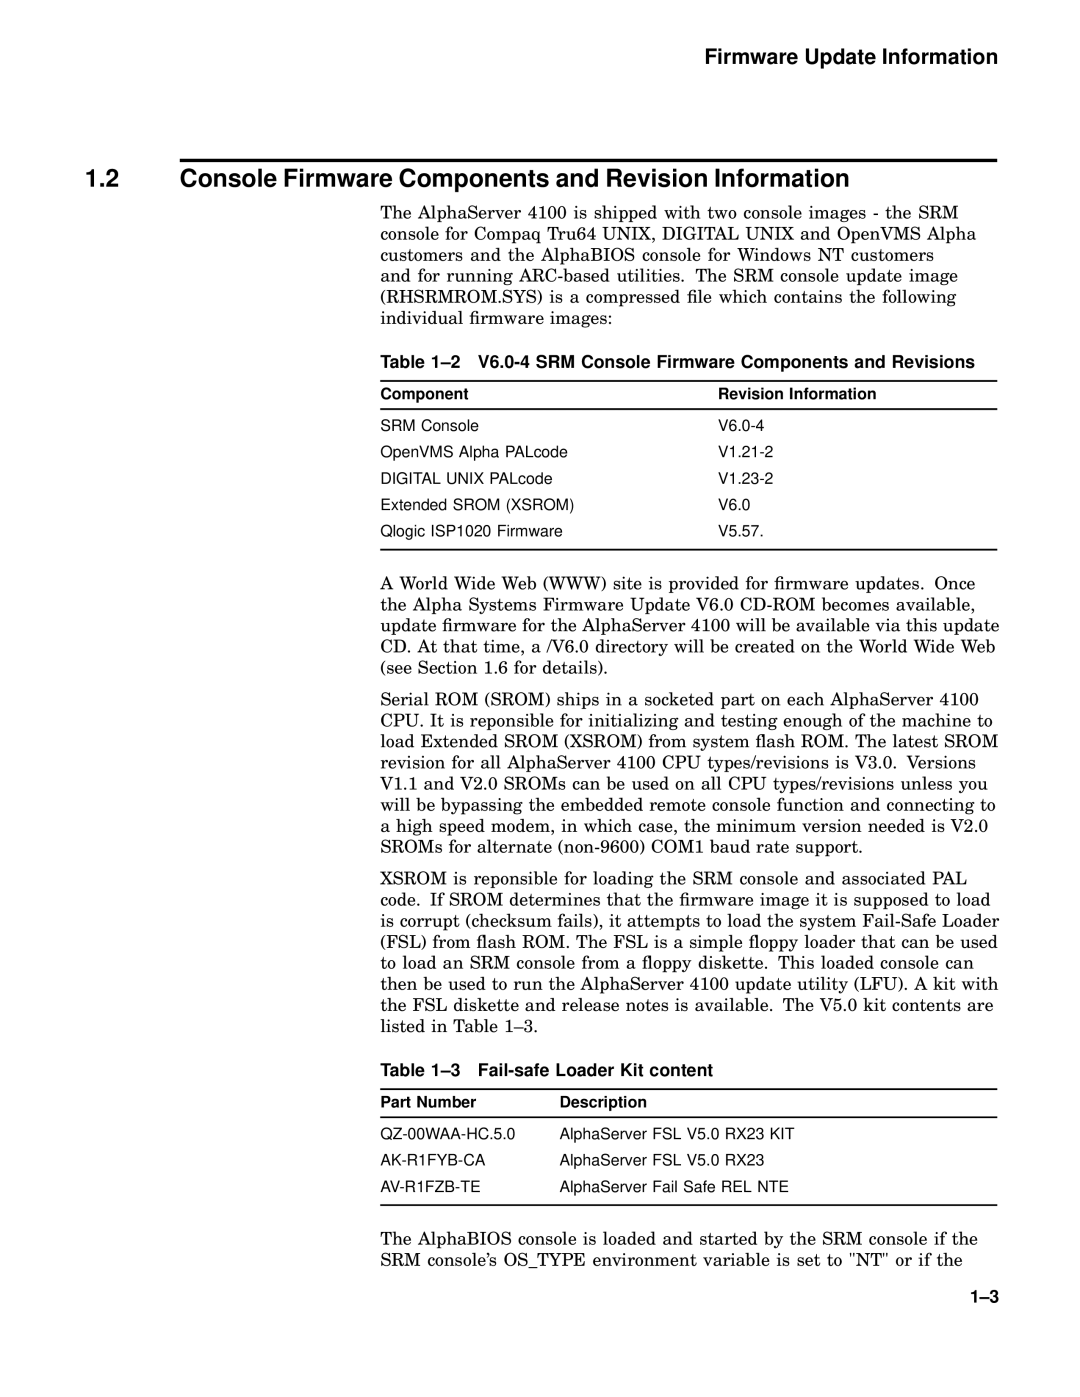 Compaq 4100 Console Firmware Components and Revision Information, Component Revision Information, Part Number Description 